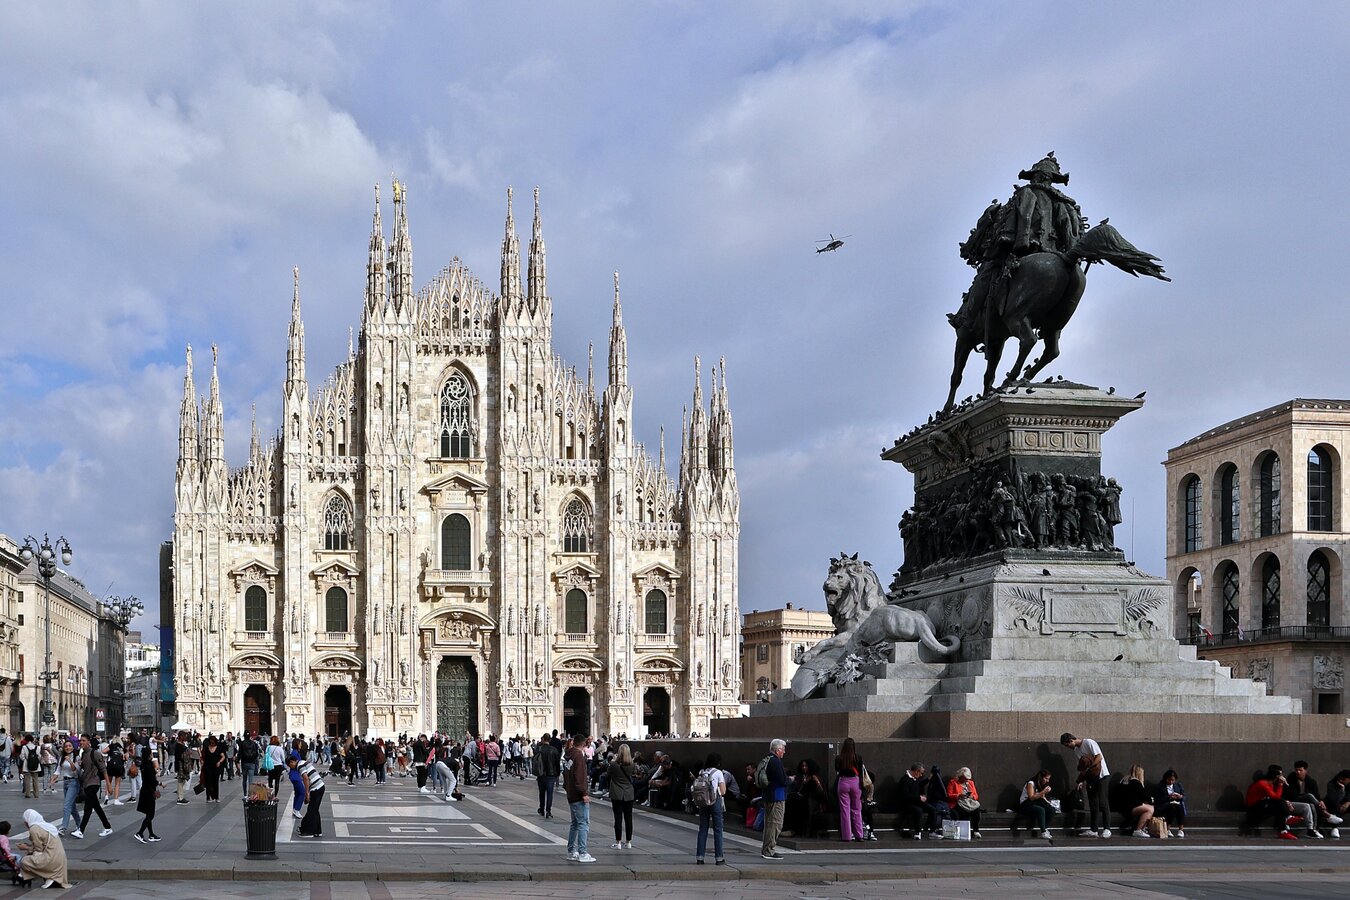 View properties for sale in Milan